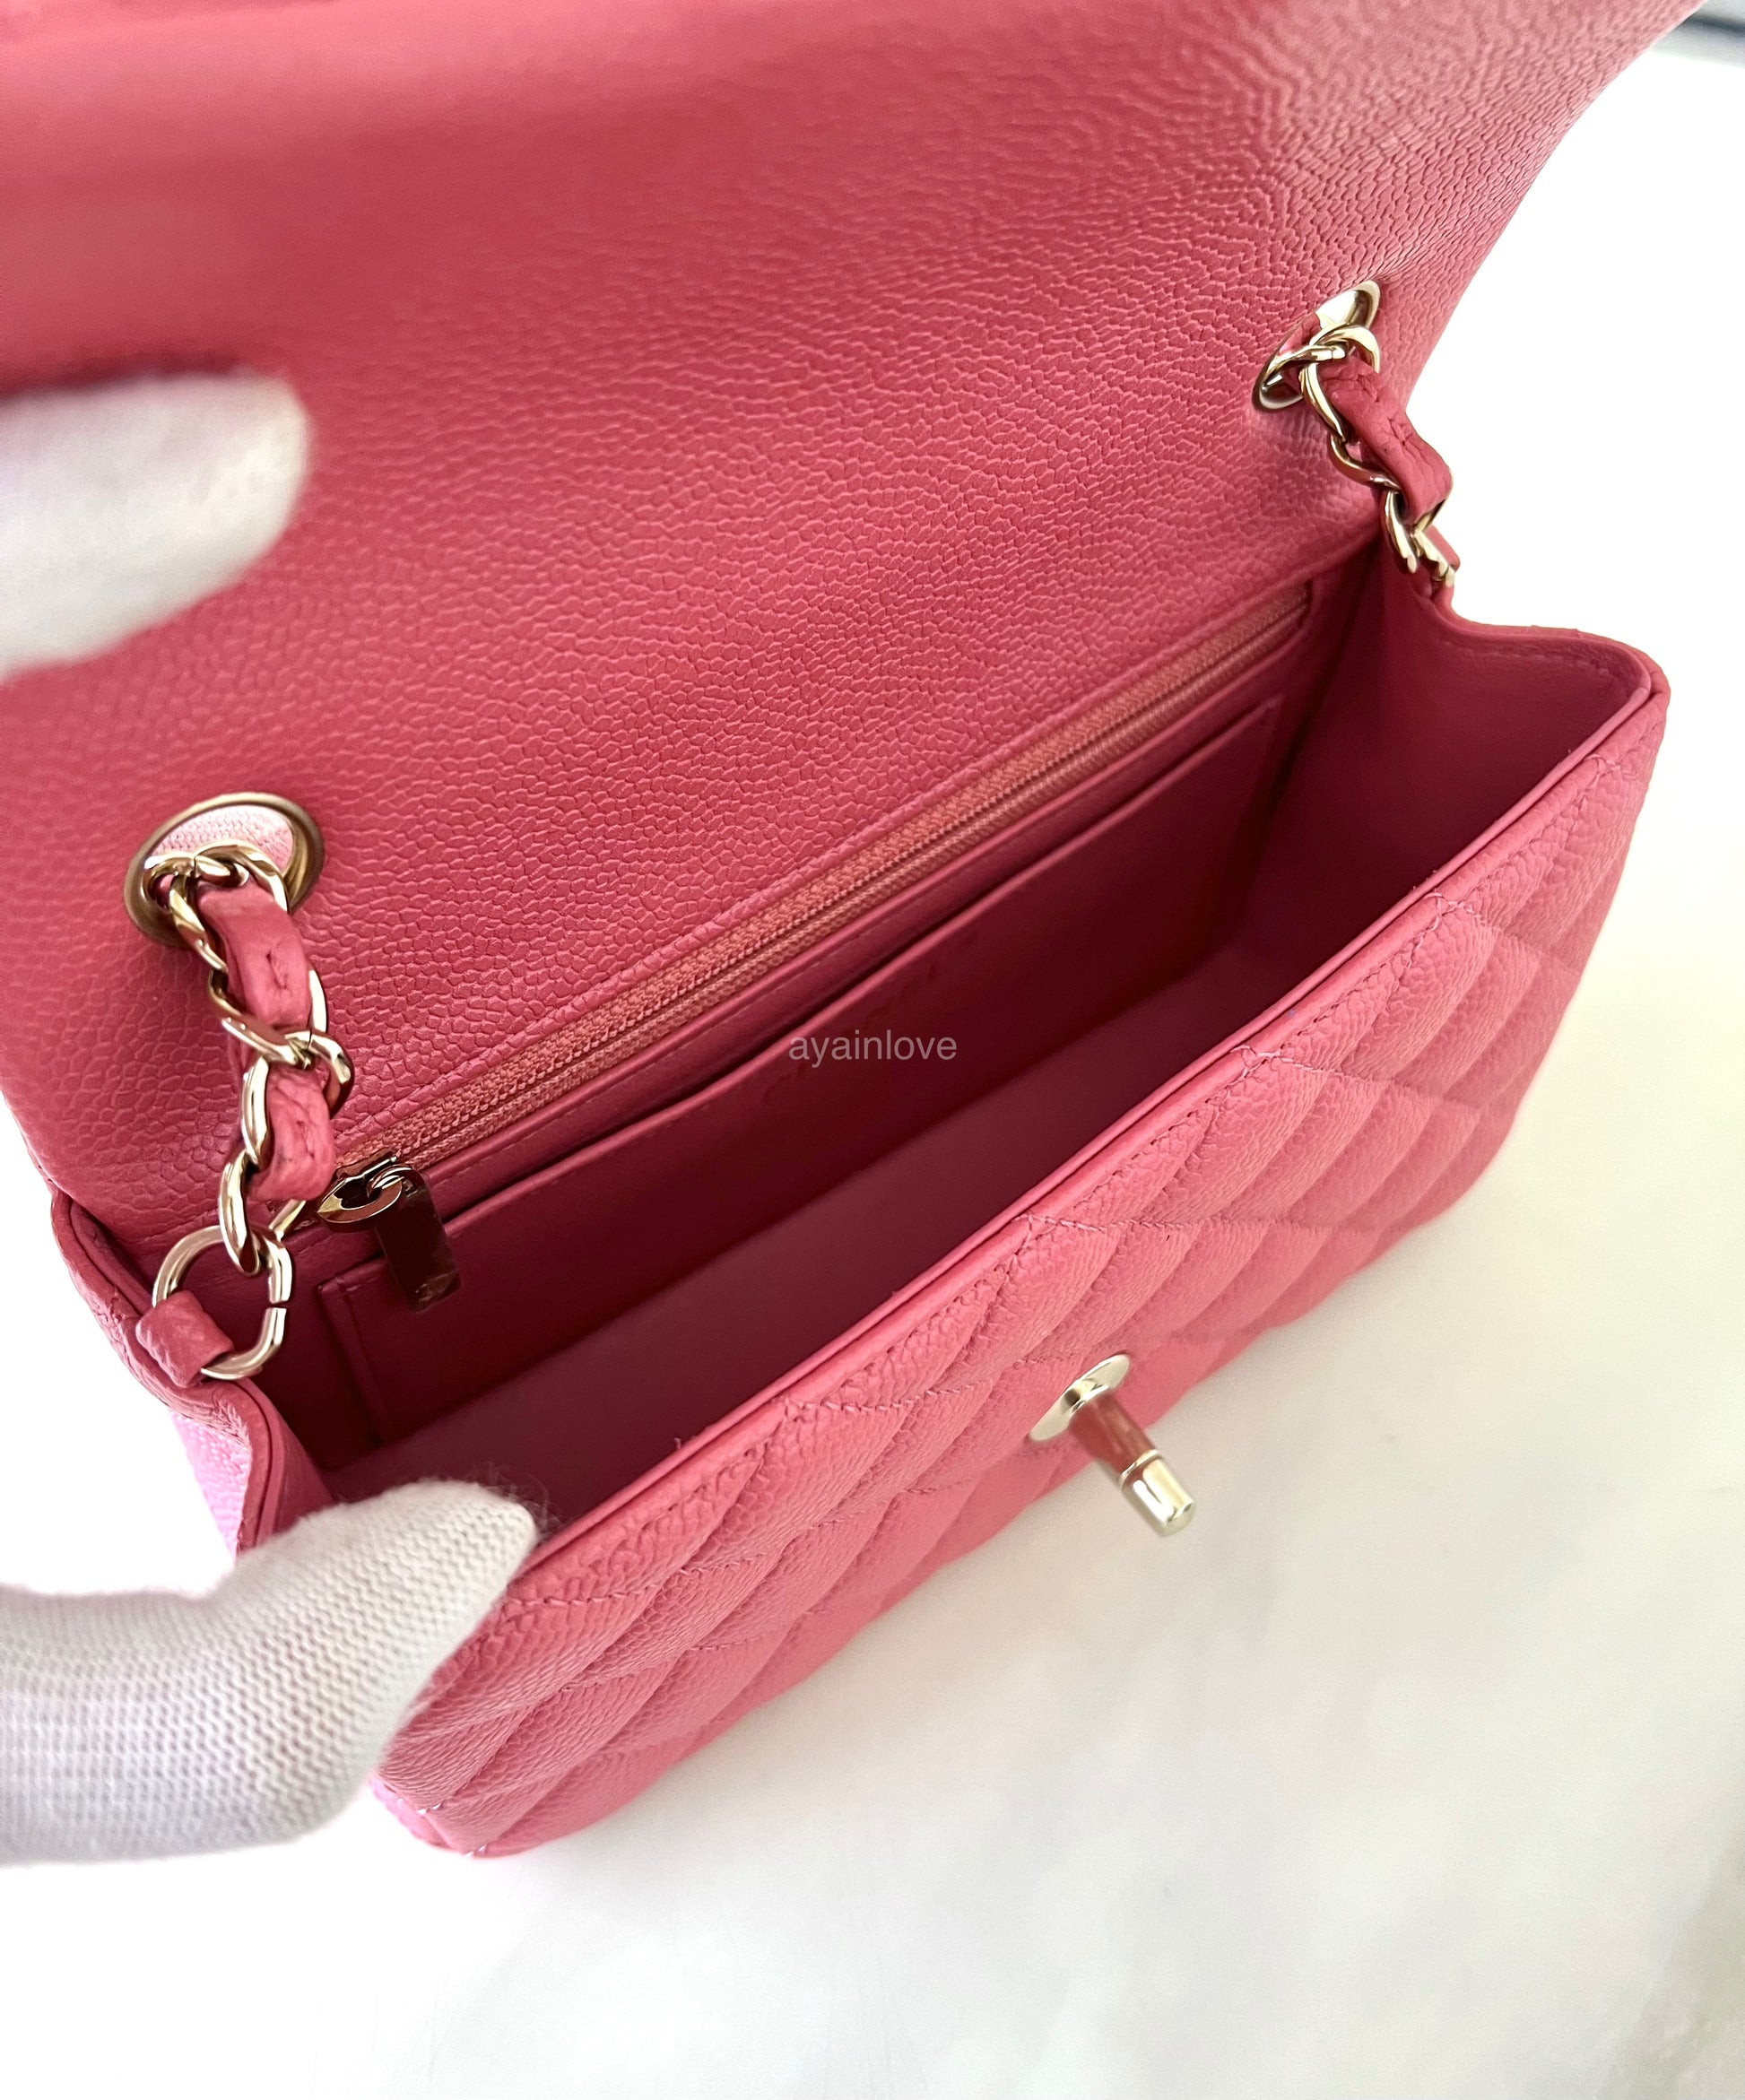 CHANEL 18S Pearly Pink Caviar Rectangular Mini Flap Bag Light Gold Hardware